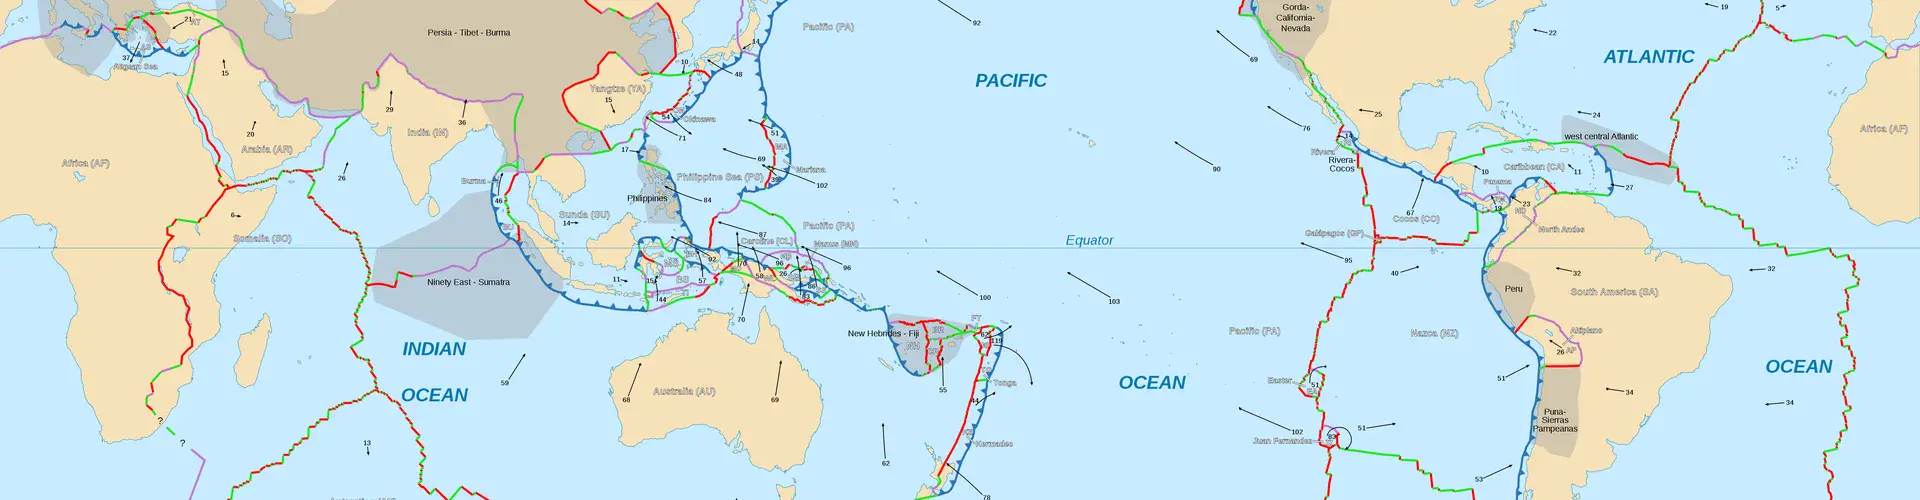 Tectonic plate boundaries (Credit: NGDC World Coast Line data/P. Bird/E. Gaba)